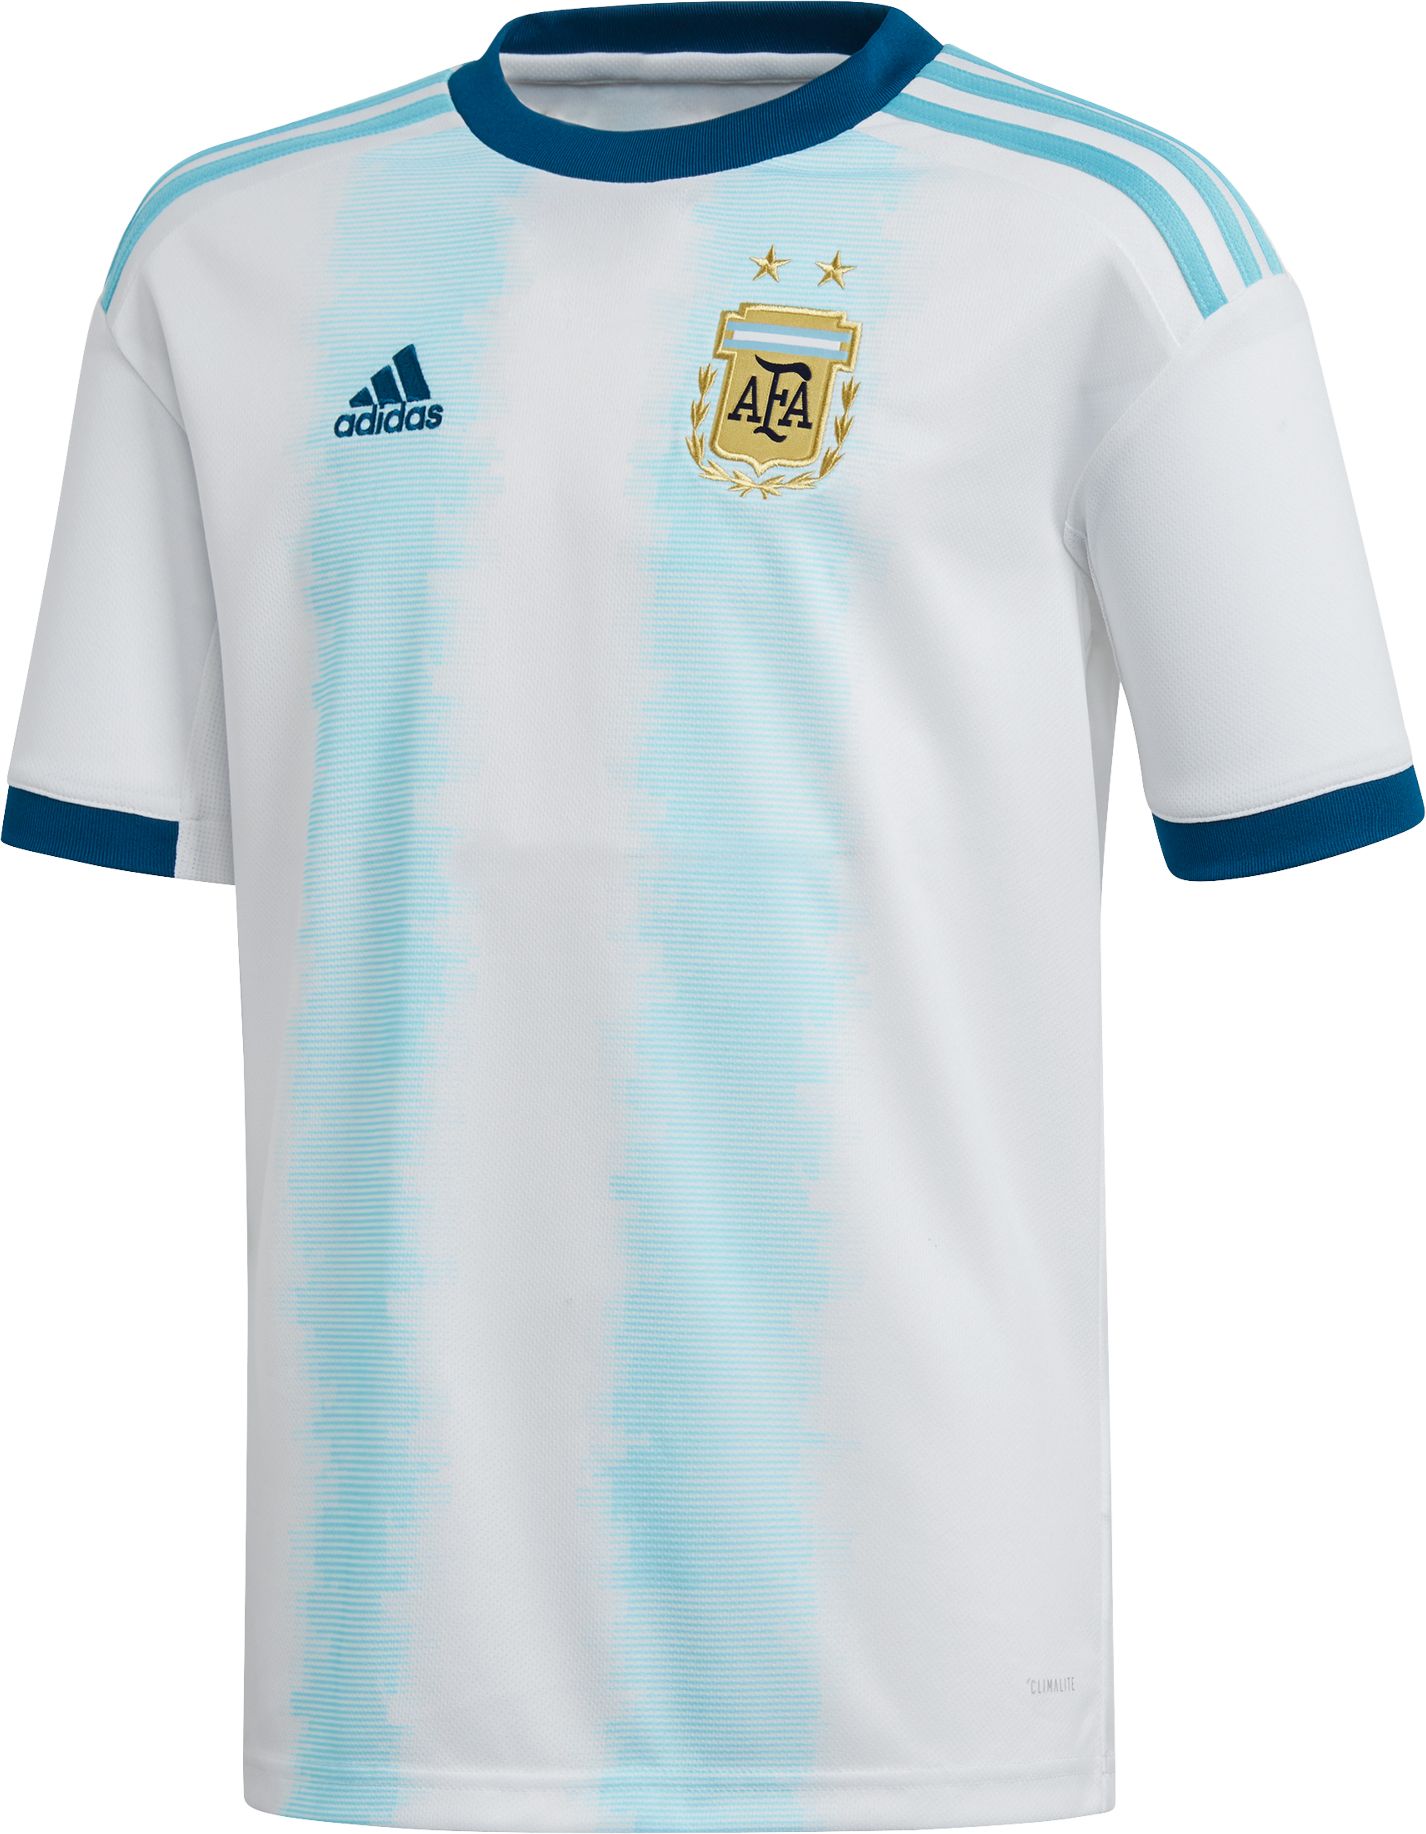 dicks argentina jersey | www 